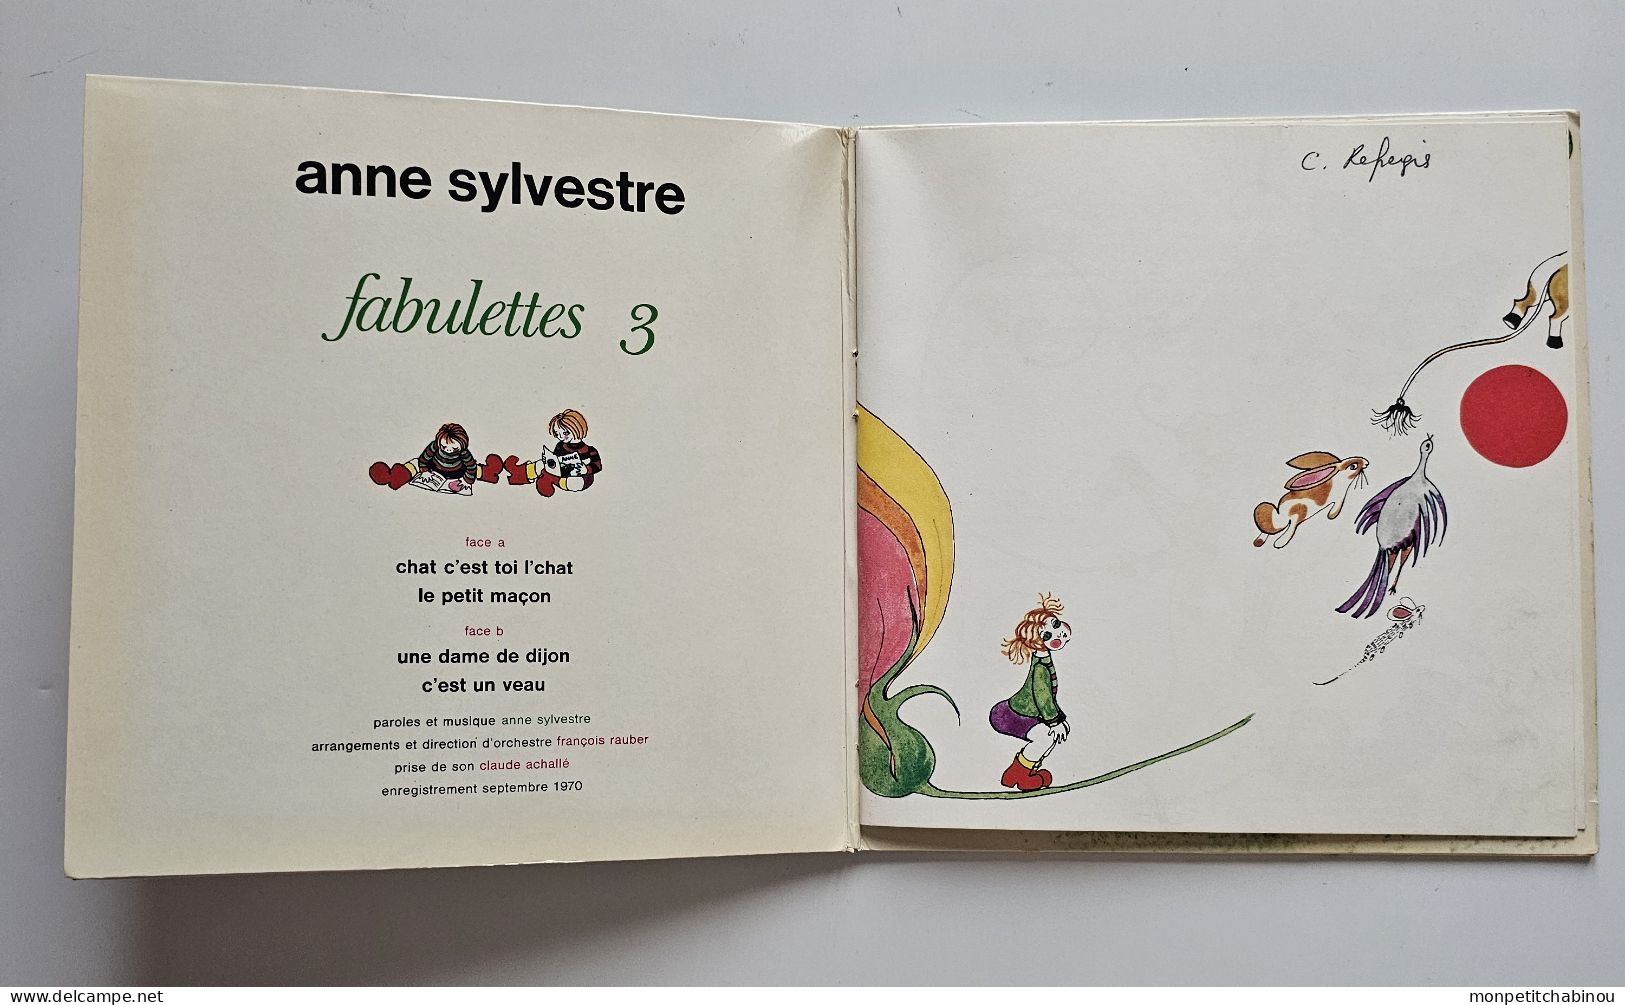 45T ANNE SYLVESTRE : Fabulettes N°3 - Kinderen